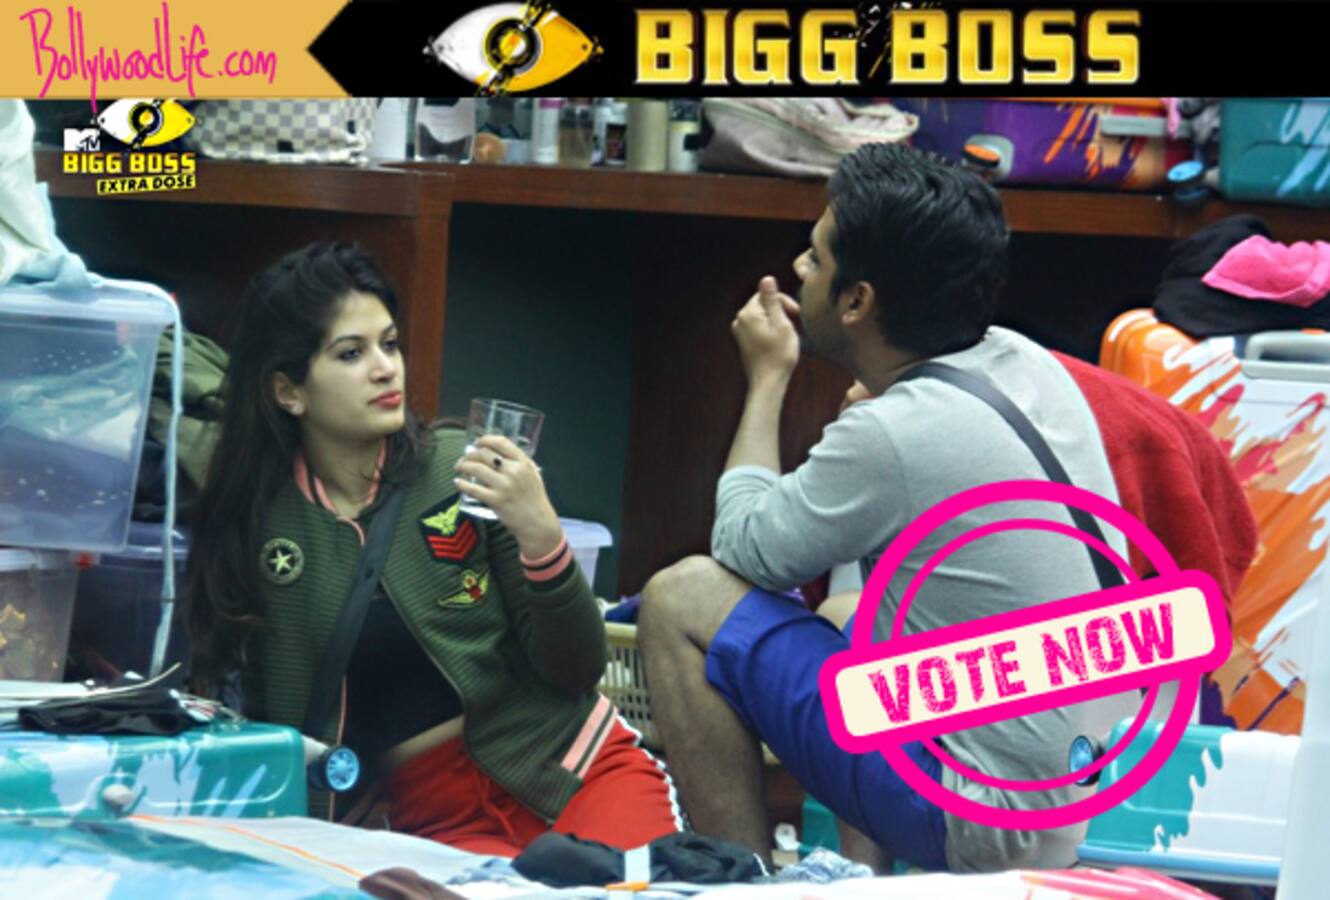 Bigg Boss 11: Is Puneesh Sharma and Bandgi Kalra's romance - FAKE or REAL? Vote!